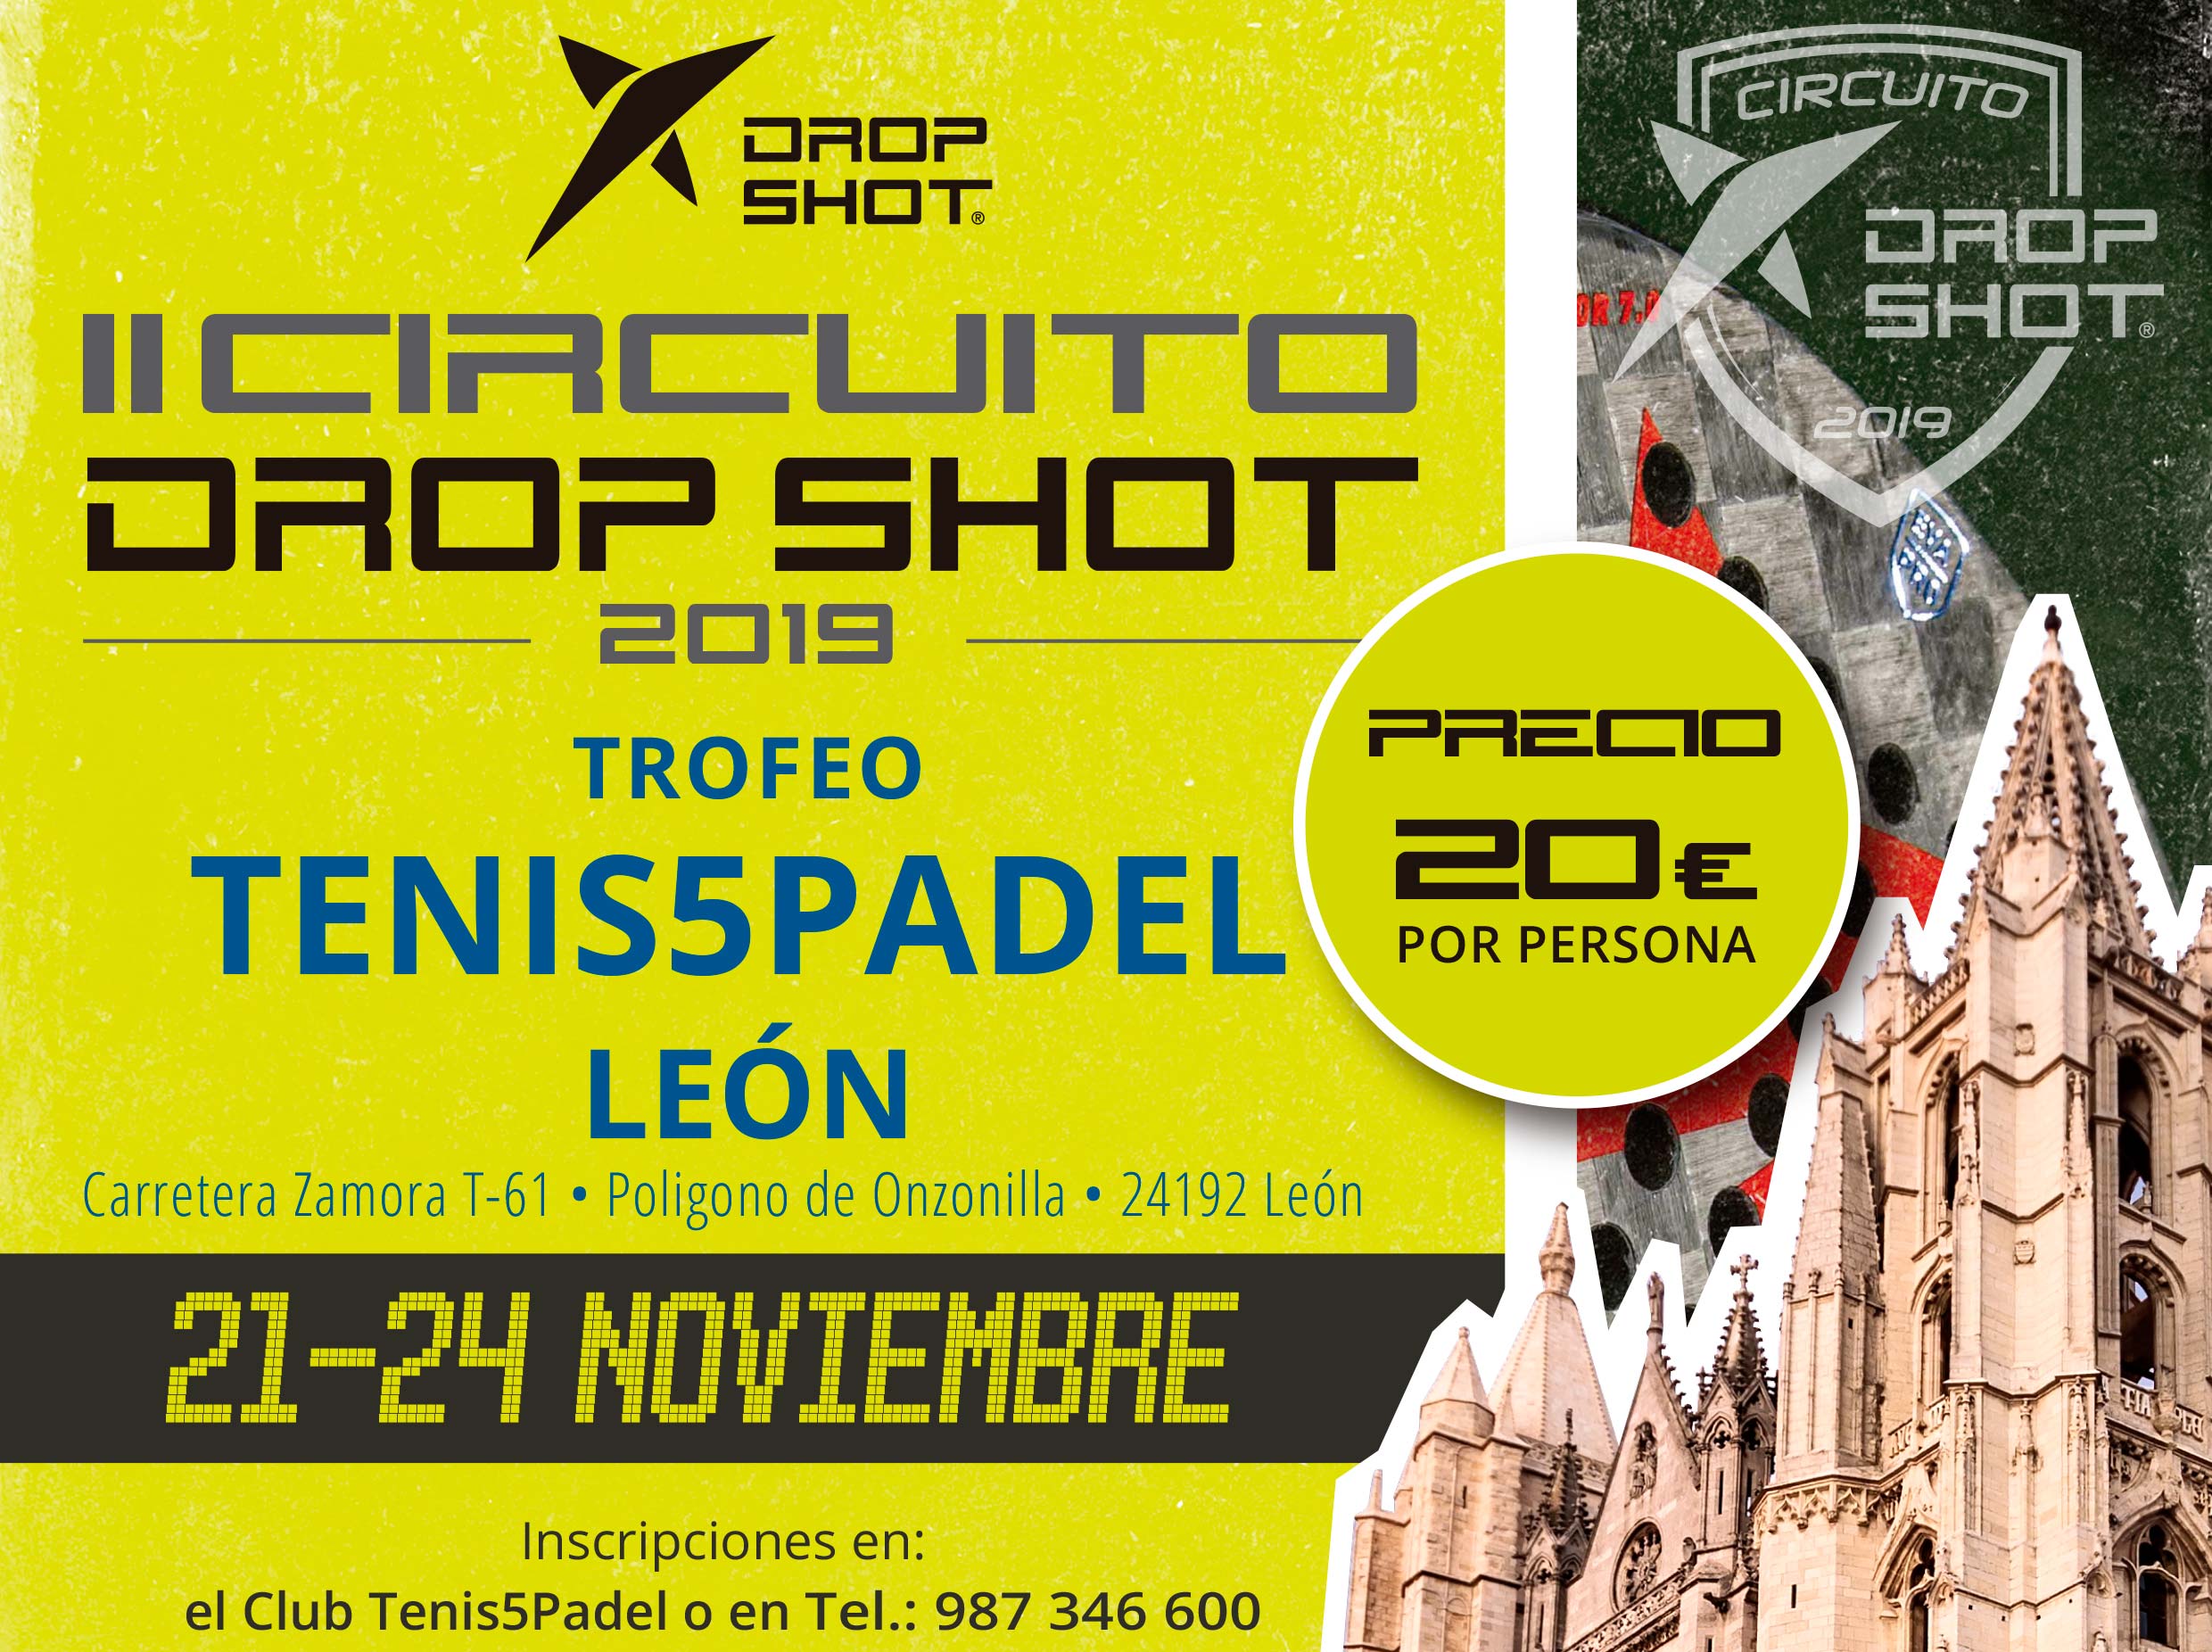 Affischen för II Drop Shot Circuit i dess test i León.